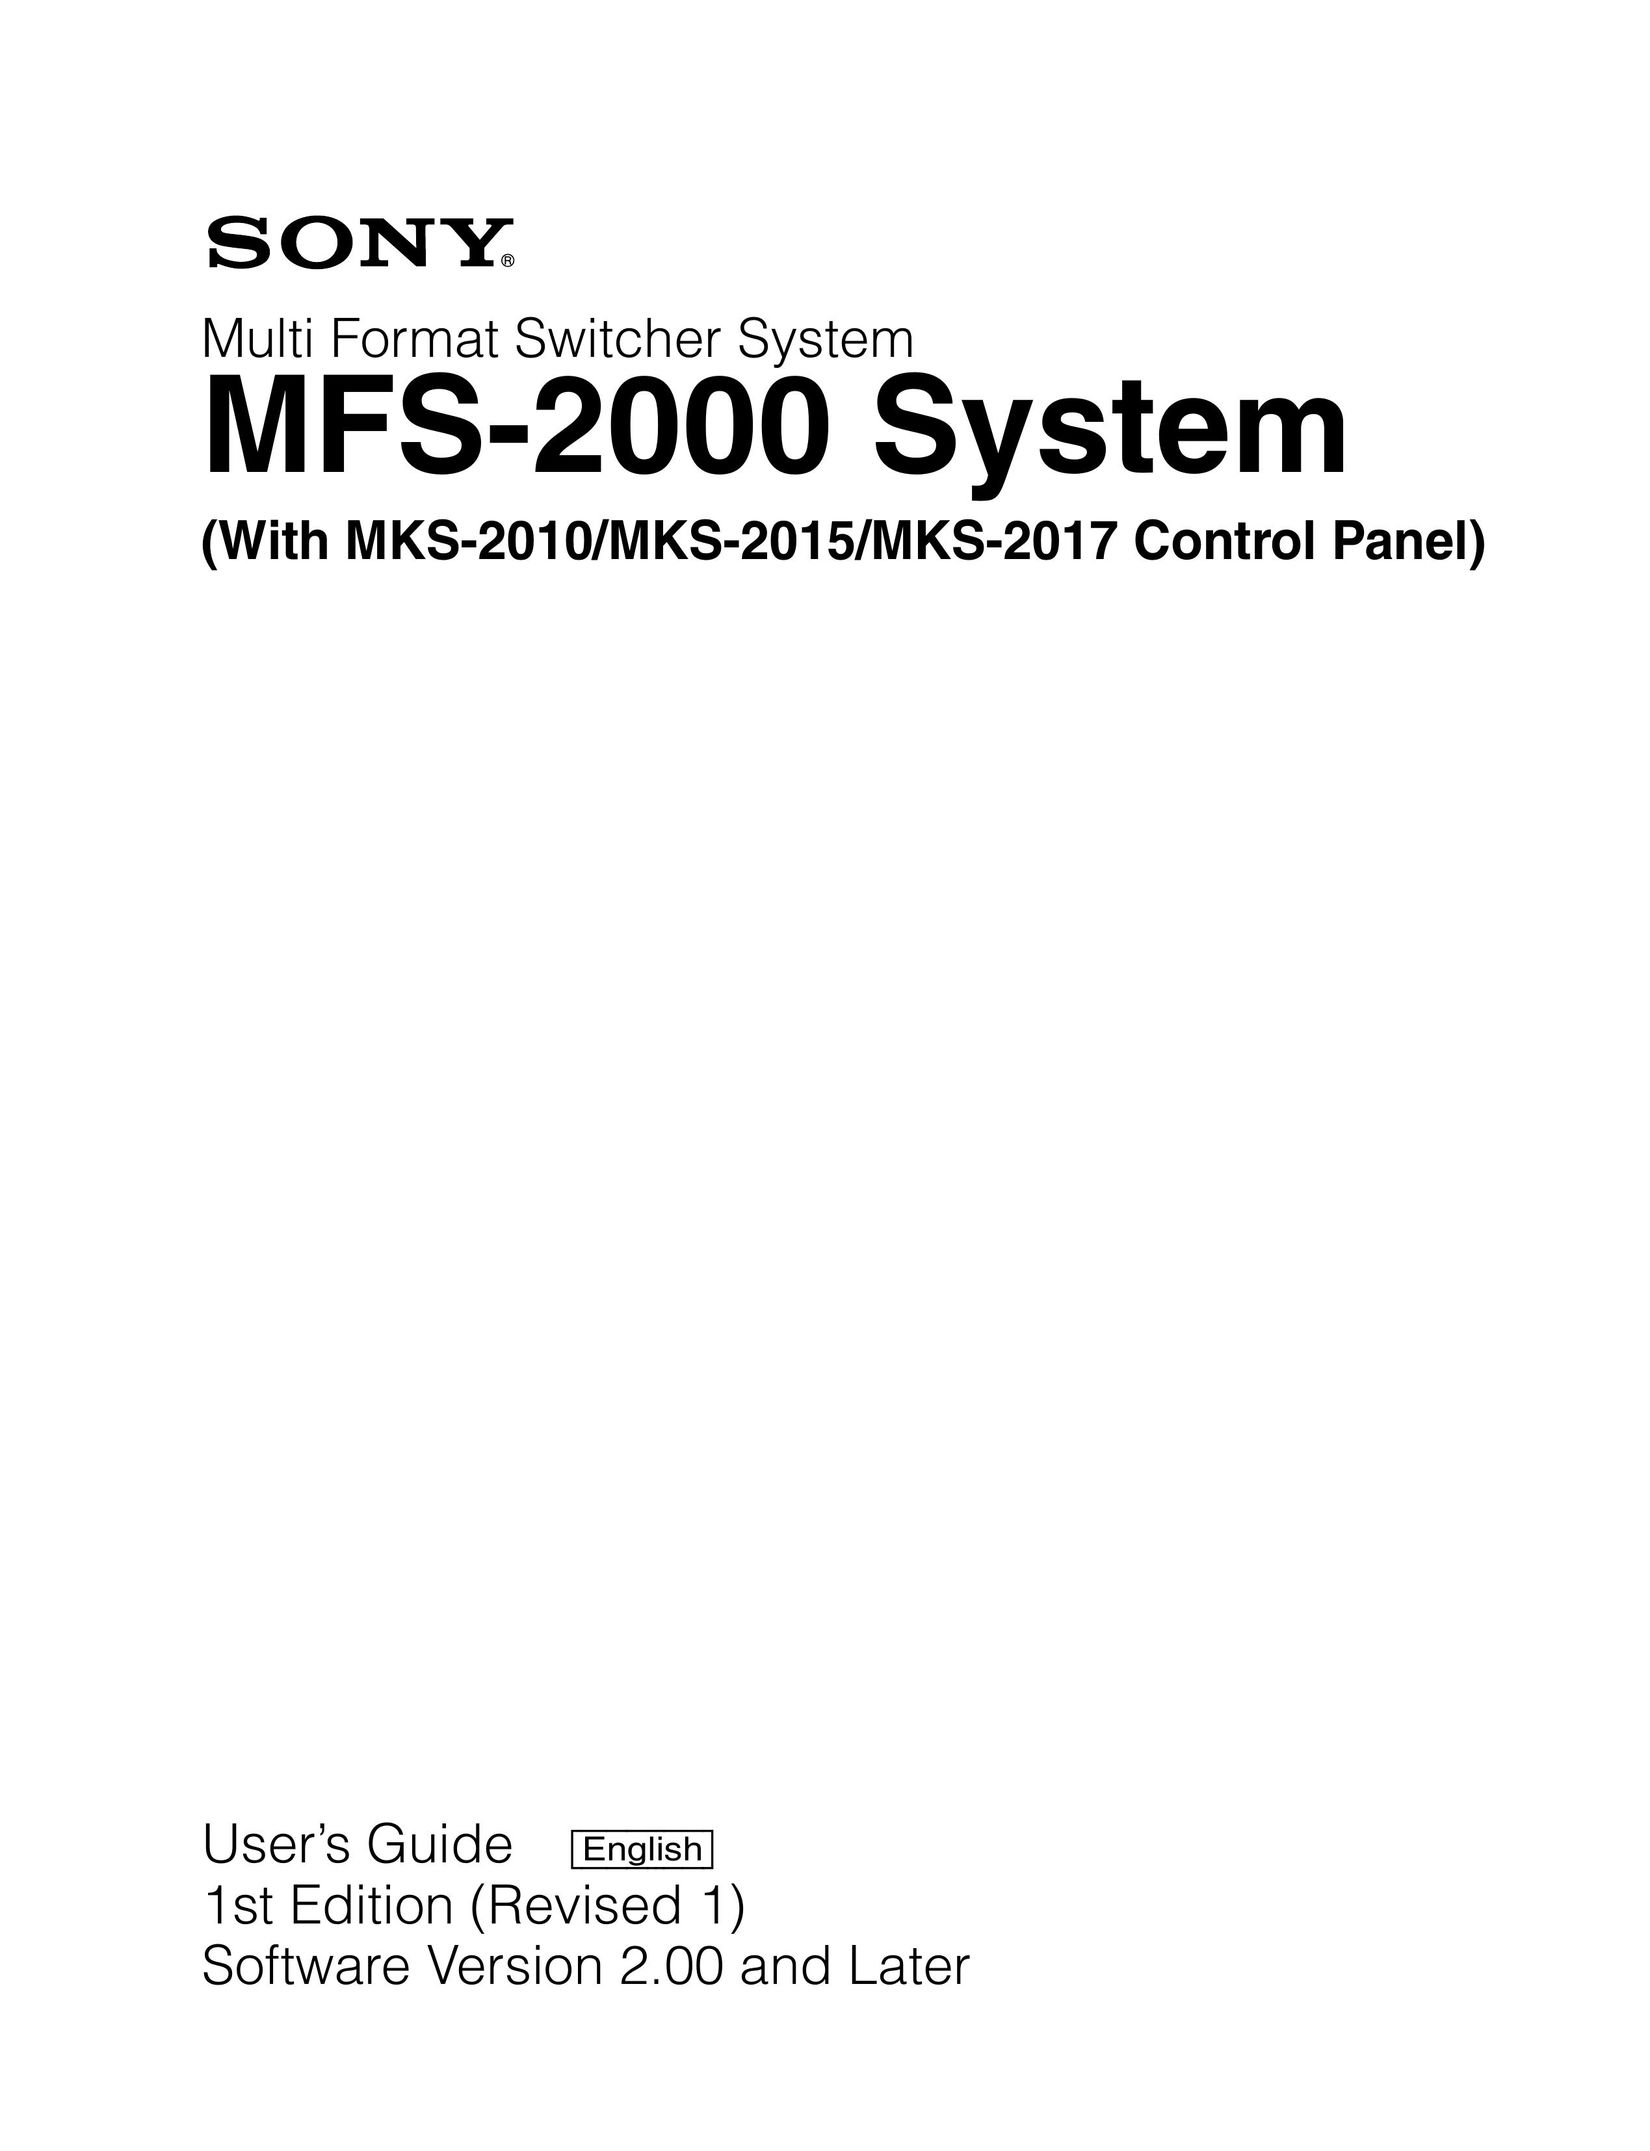 Sony MKS-2010 Switch User Manual